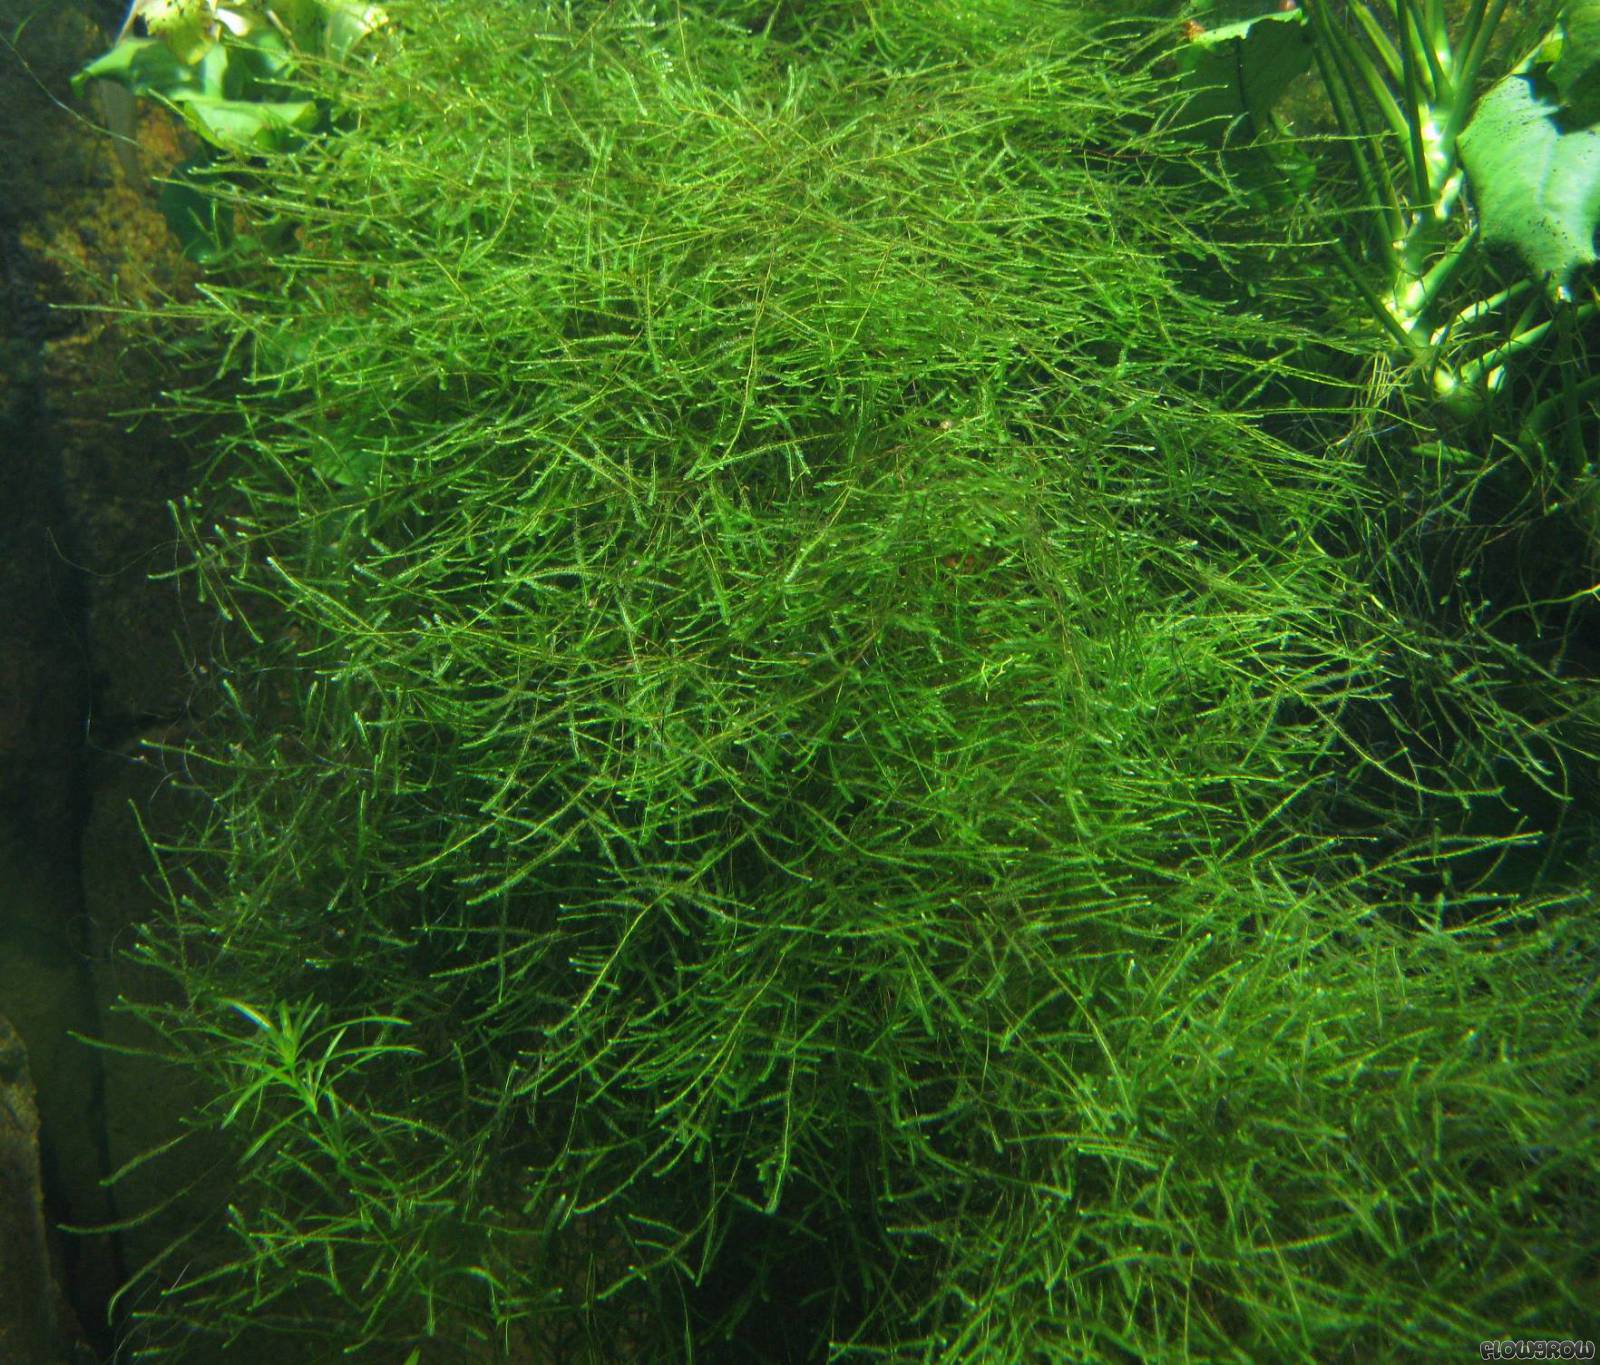 https://www.flowgrow.de/db/aquaticplants/taxiphyllum-barbieri